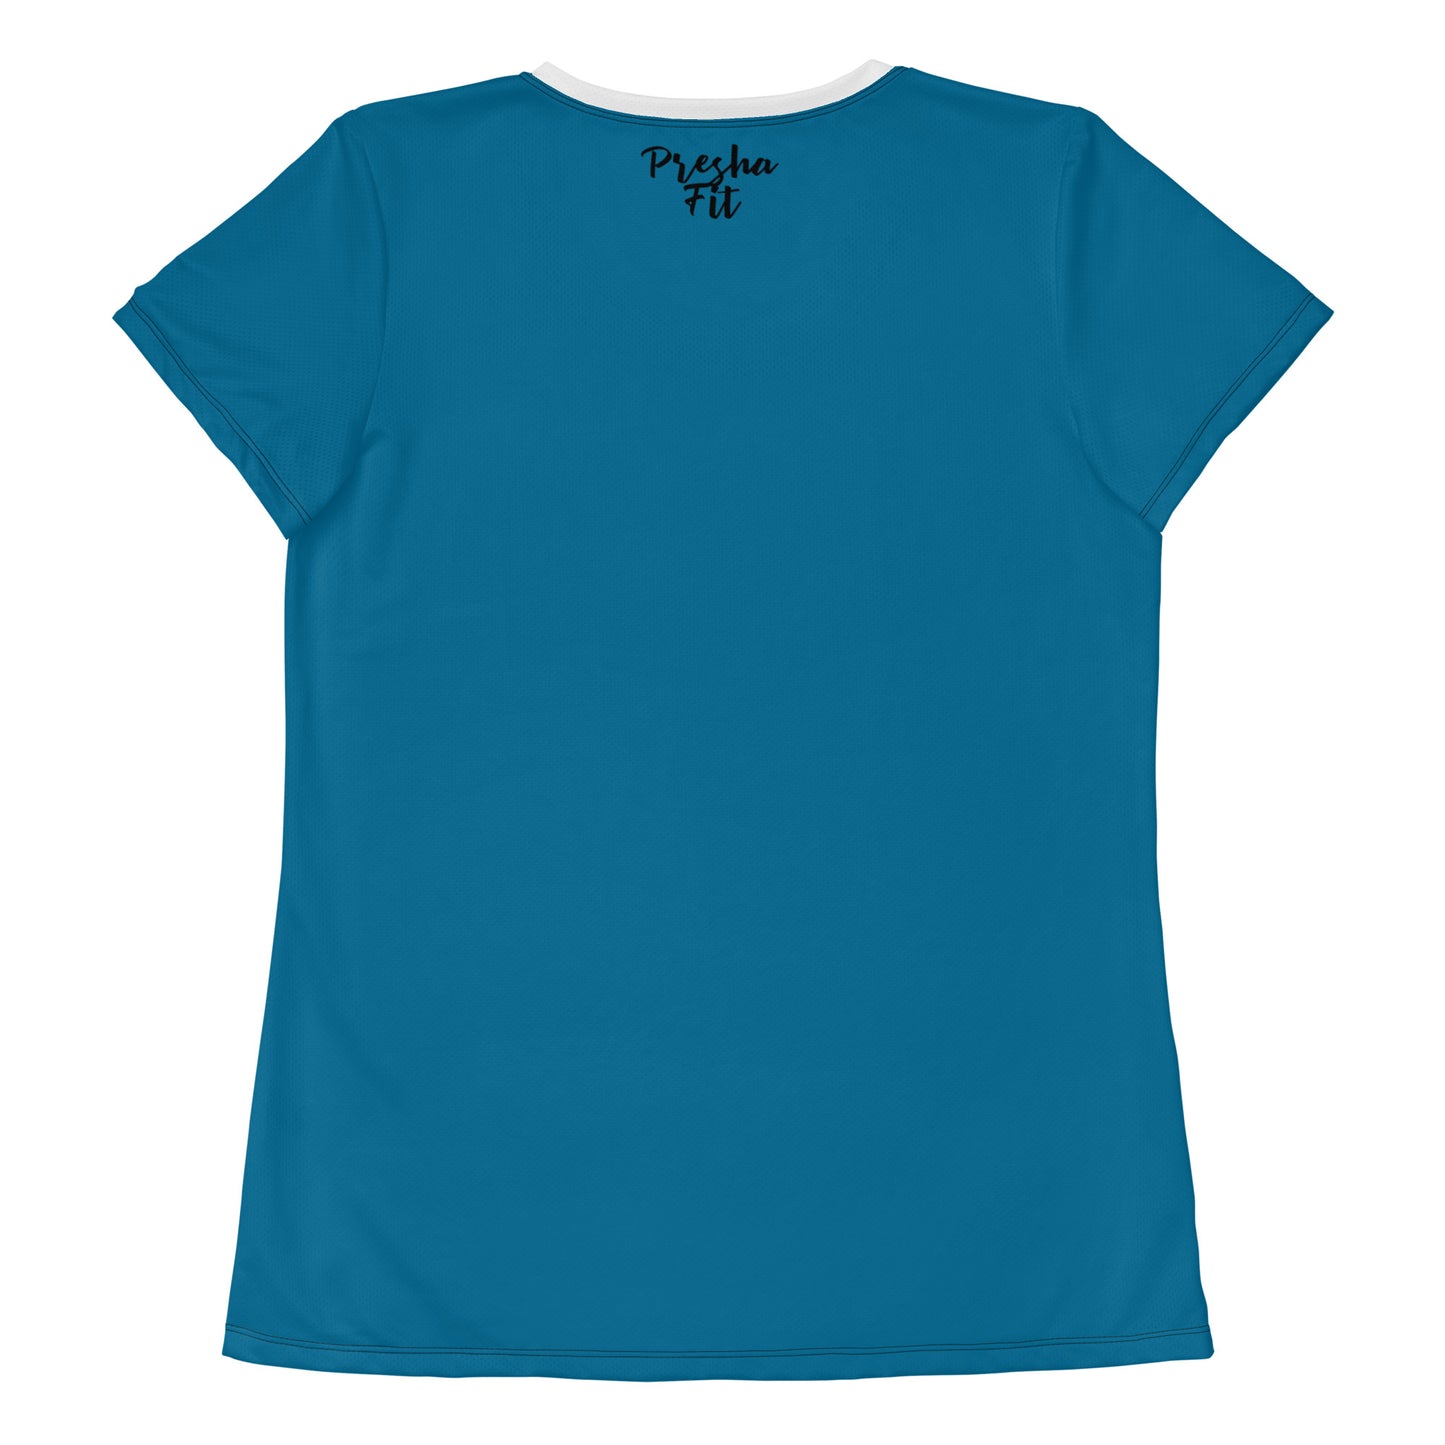 Presha Fit Women's Athletic T-Shirt